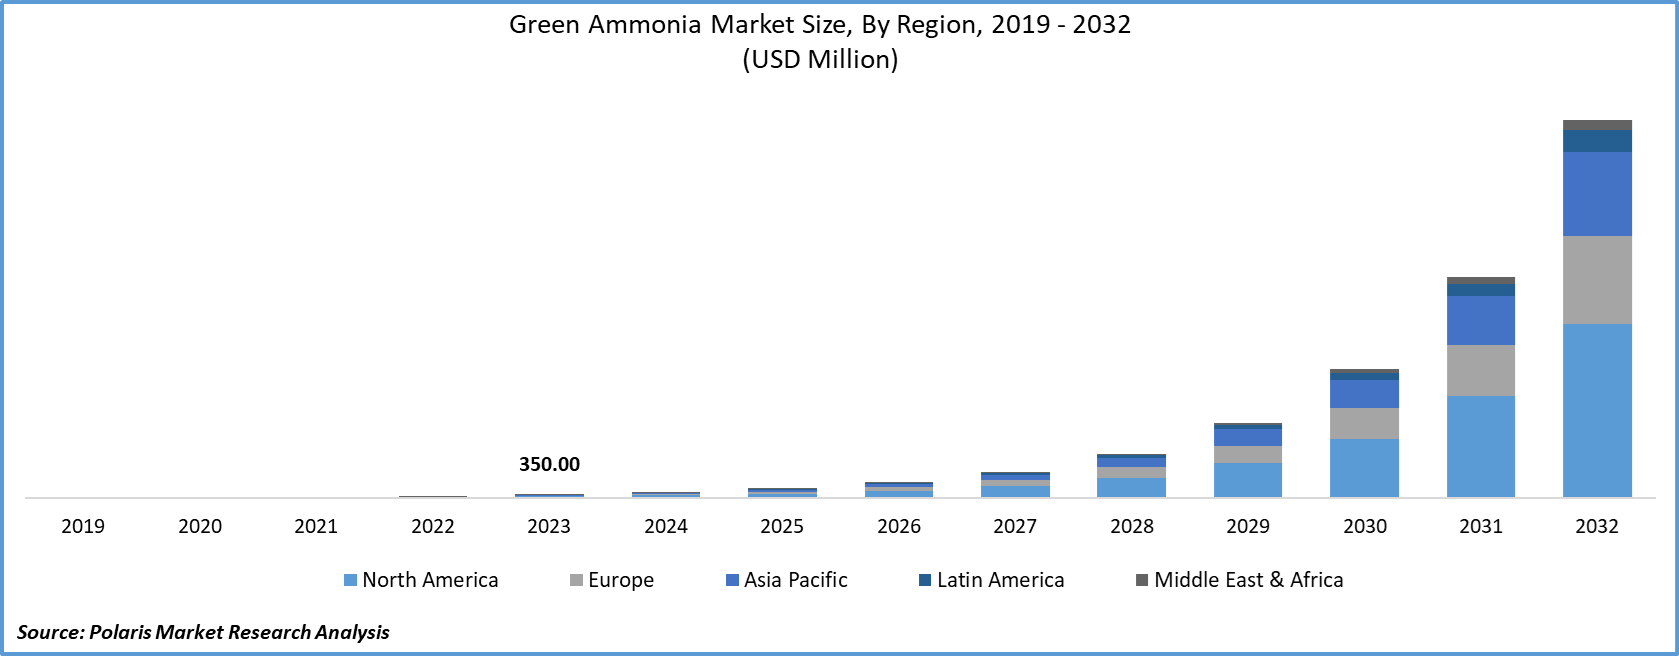 Green Ammonia Market Size